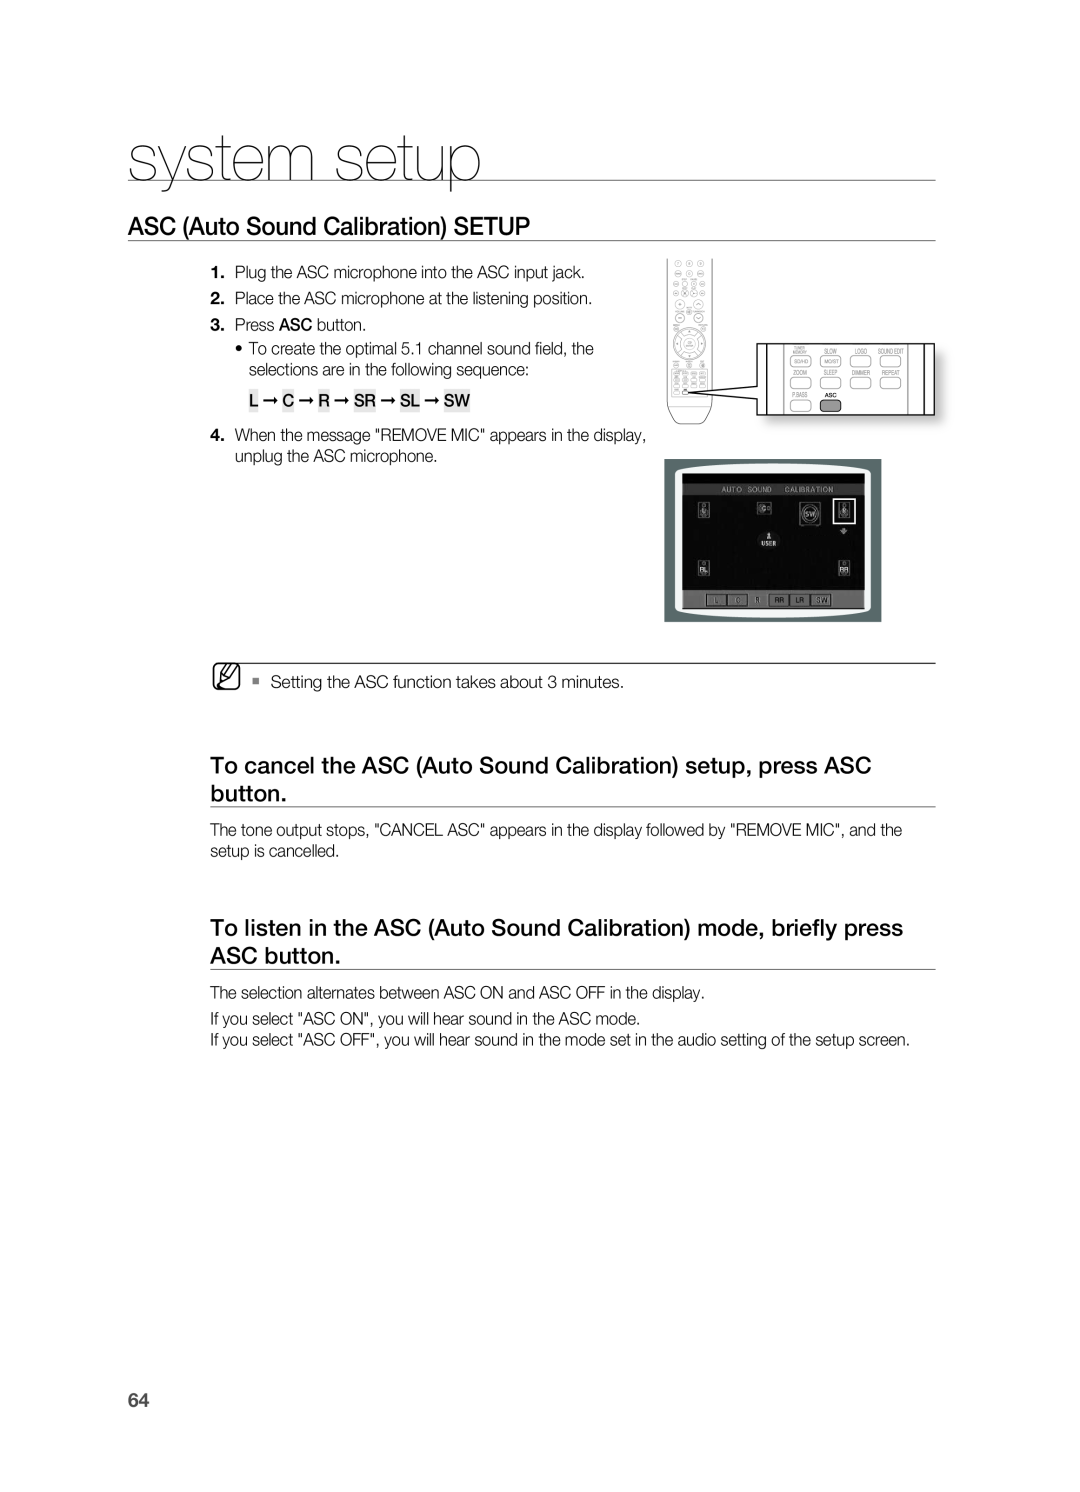 Samsung HT-TZ515 user manual system setup, ASC Auto Sound Calibration SETUP, L C r Sr SL SW 